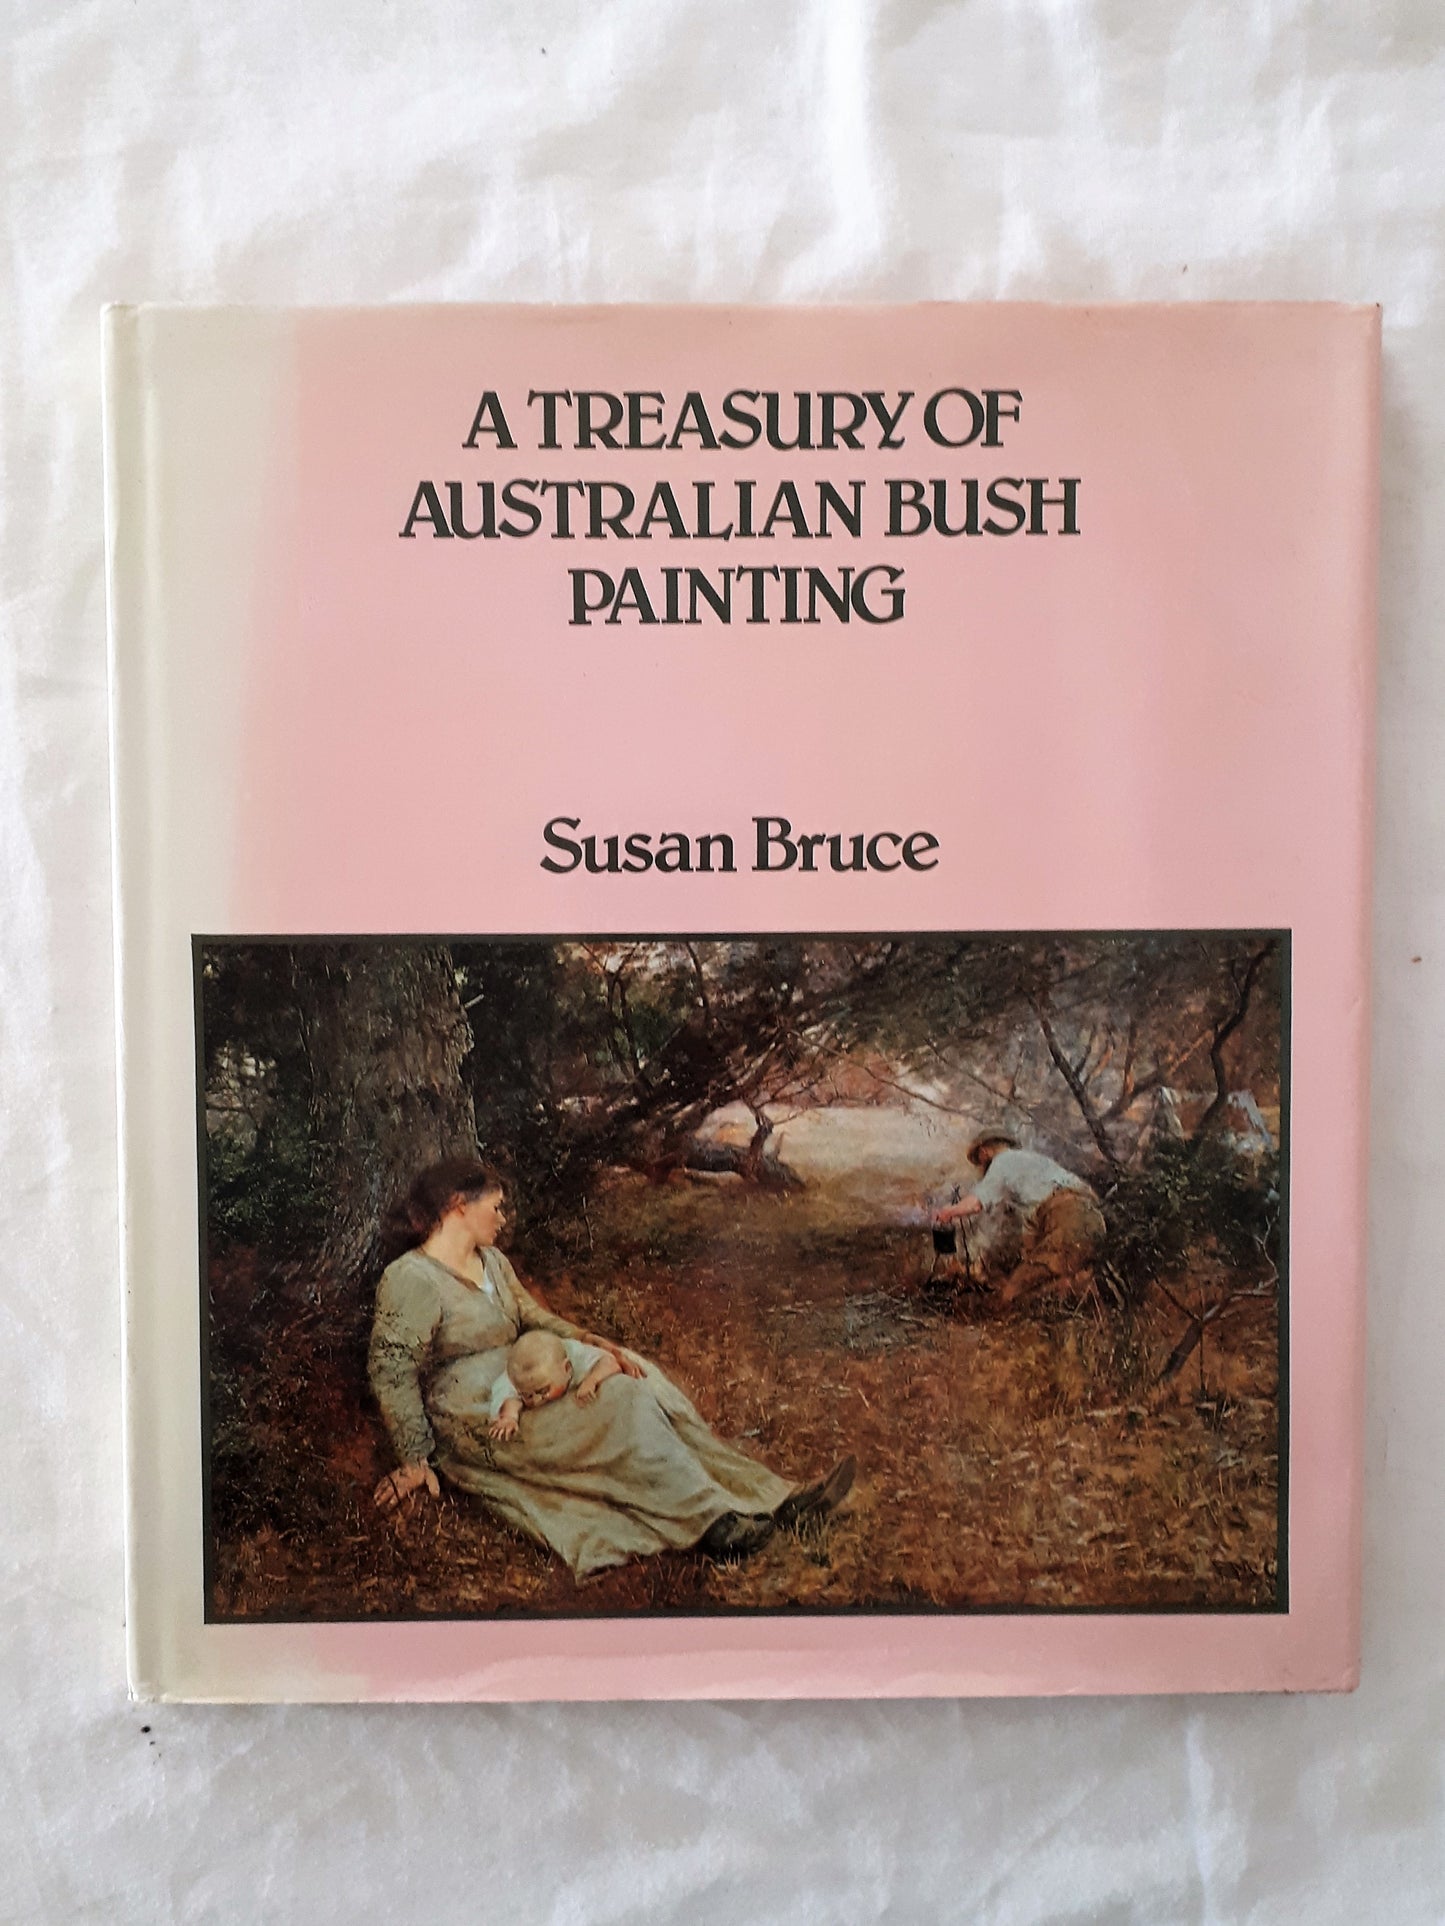 A Treasury of Australian Bush Painting by Susan Bruce